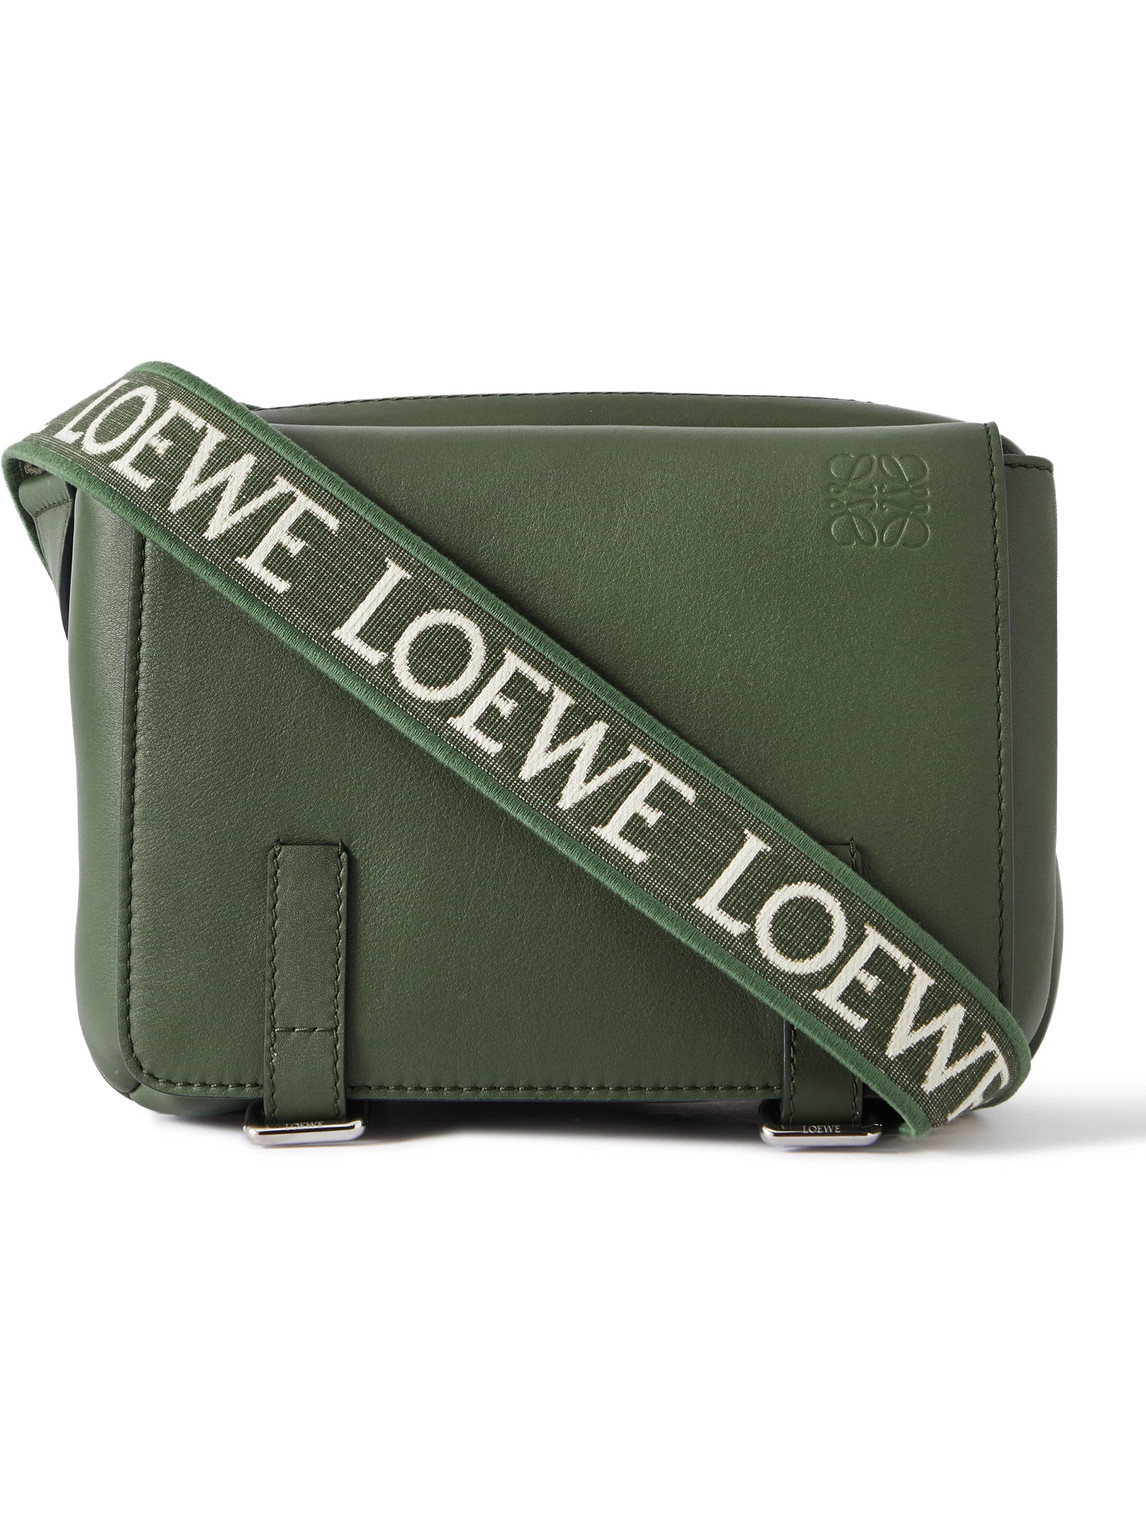 Loewe Military Leather Messenger Bag In Green